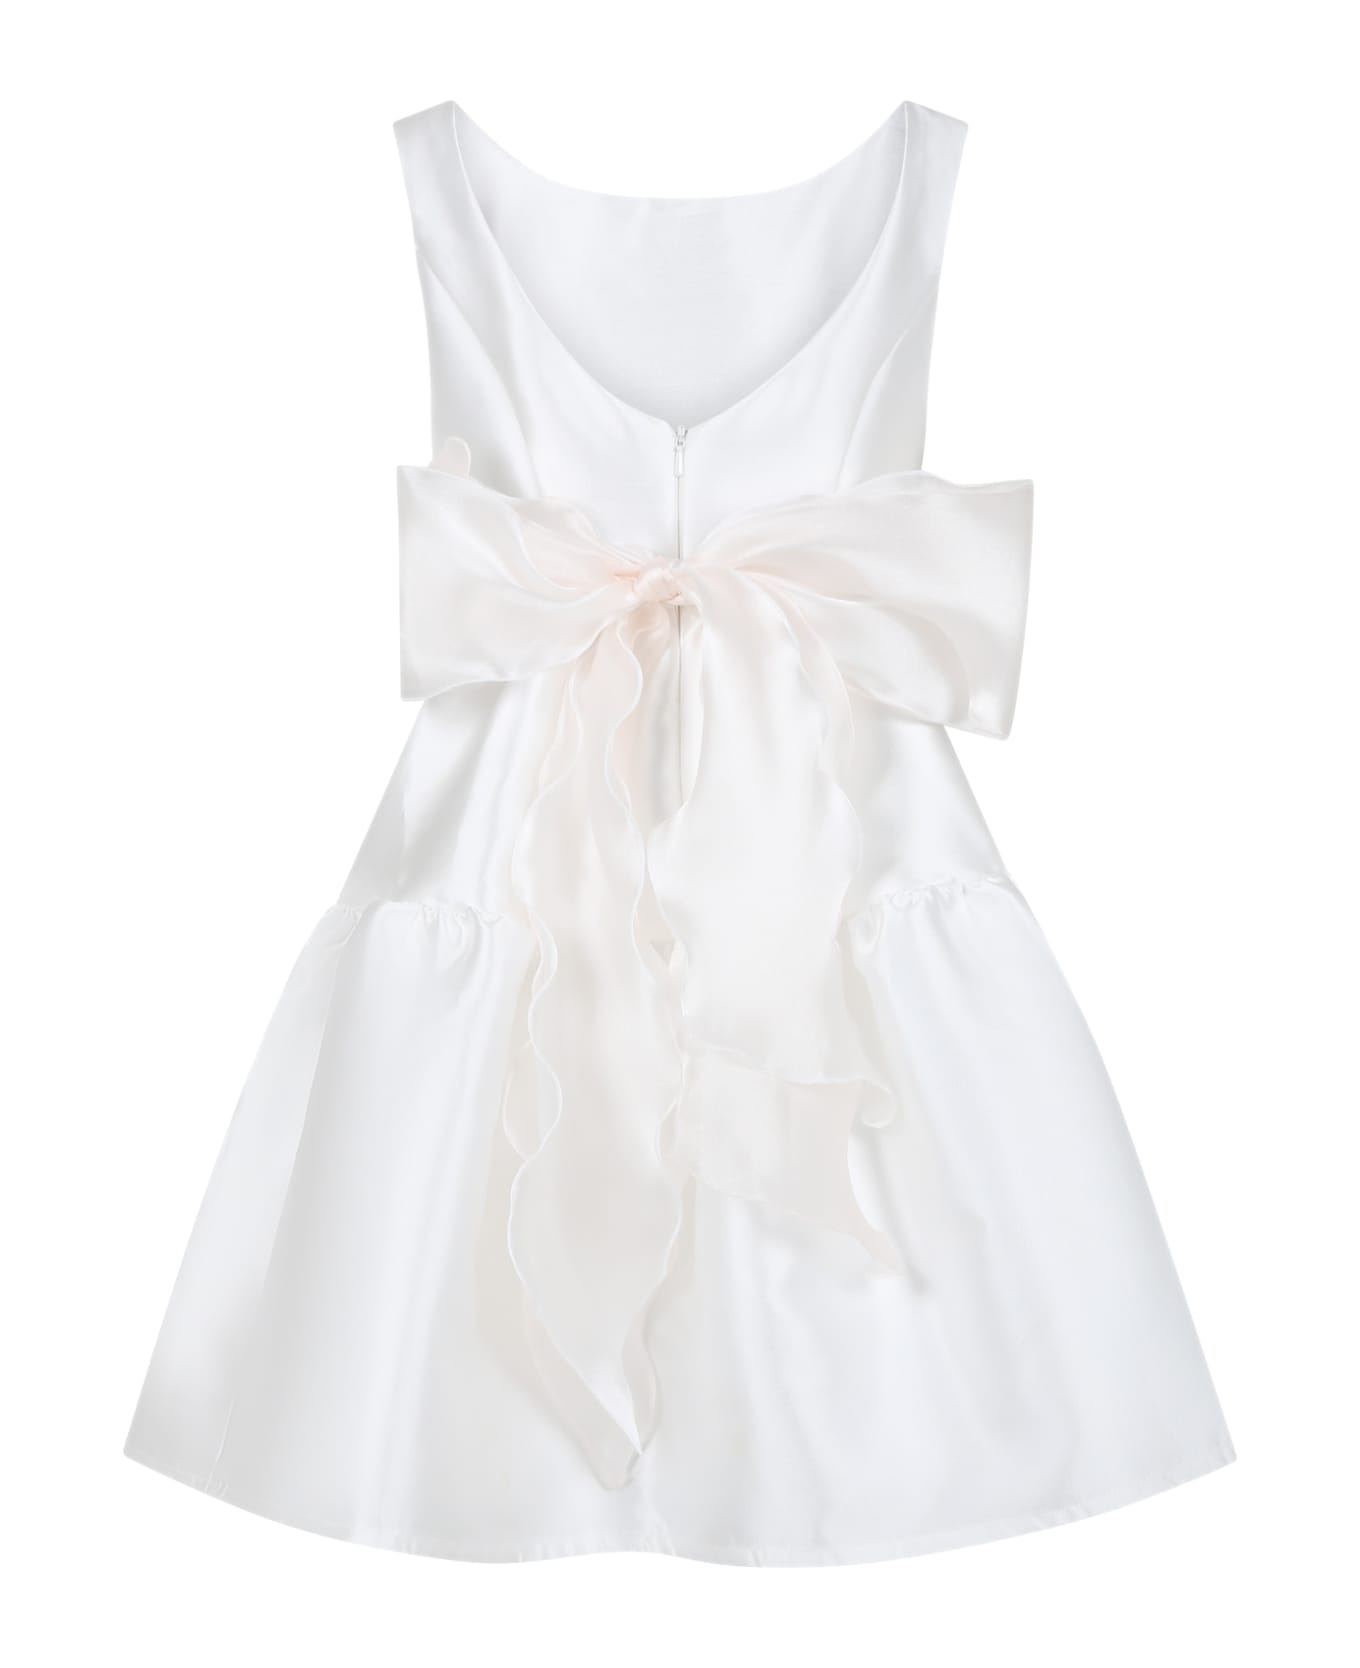 Monnalisa White Dress For Girl With Bow - White